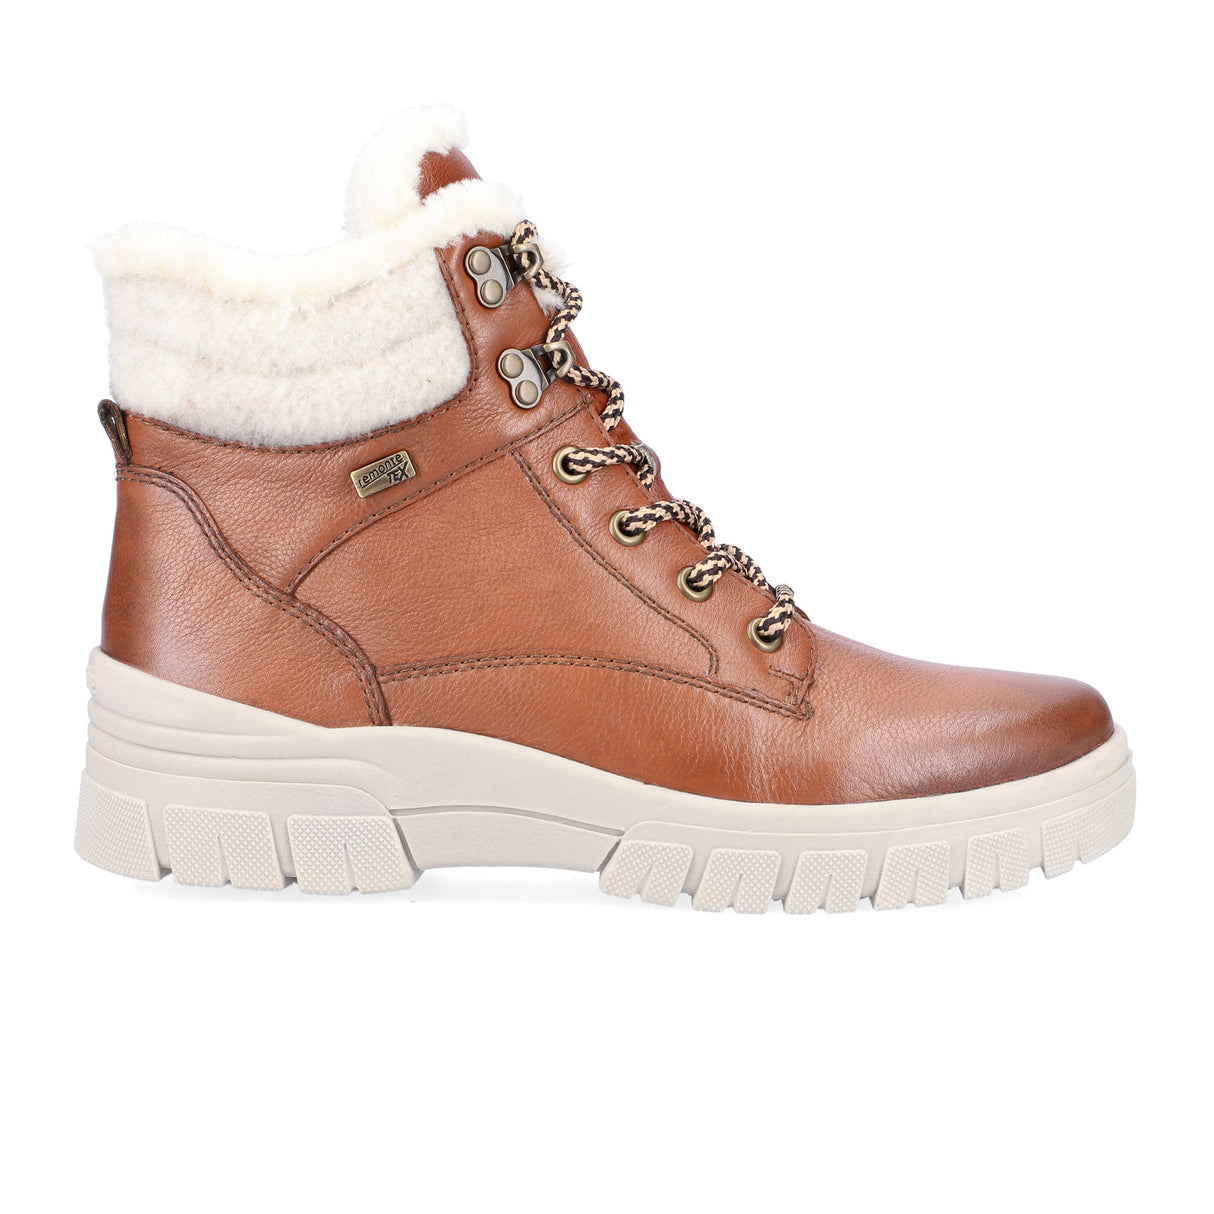 Remonte Evi D0E71 Mid Winter Boot (Women) - Amaretto/Sand/Amaretto Boots - Winter - Mid Boot - The Heel Shoe Fitters